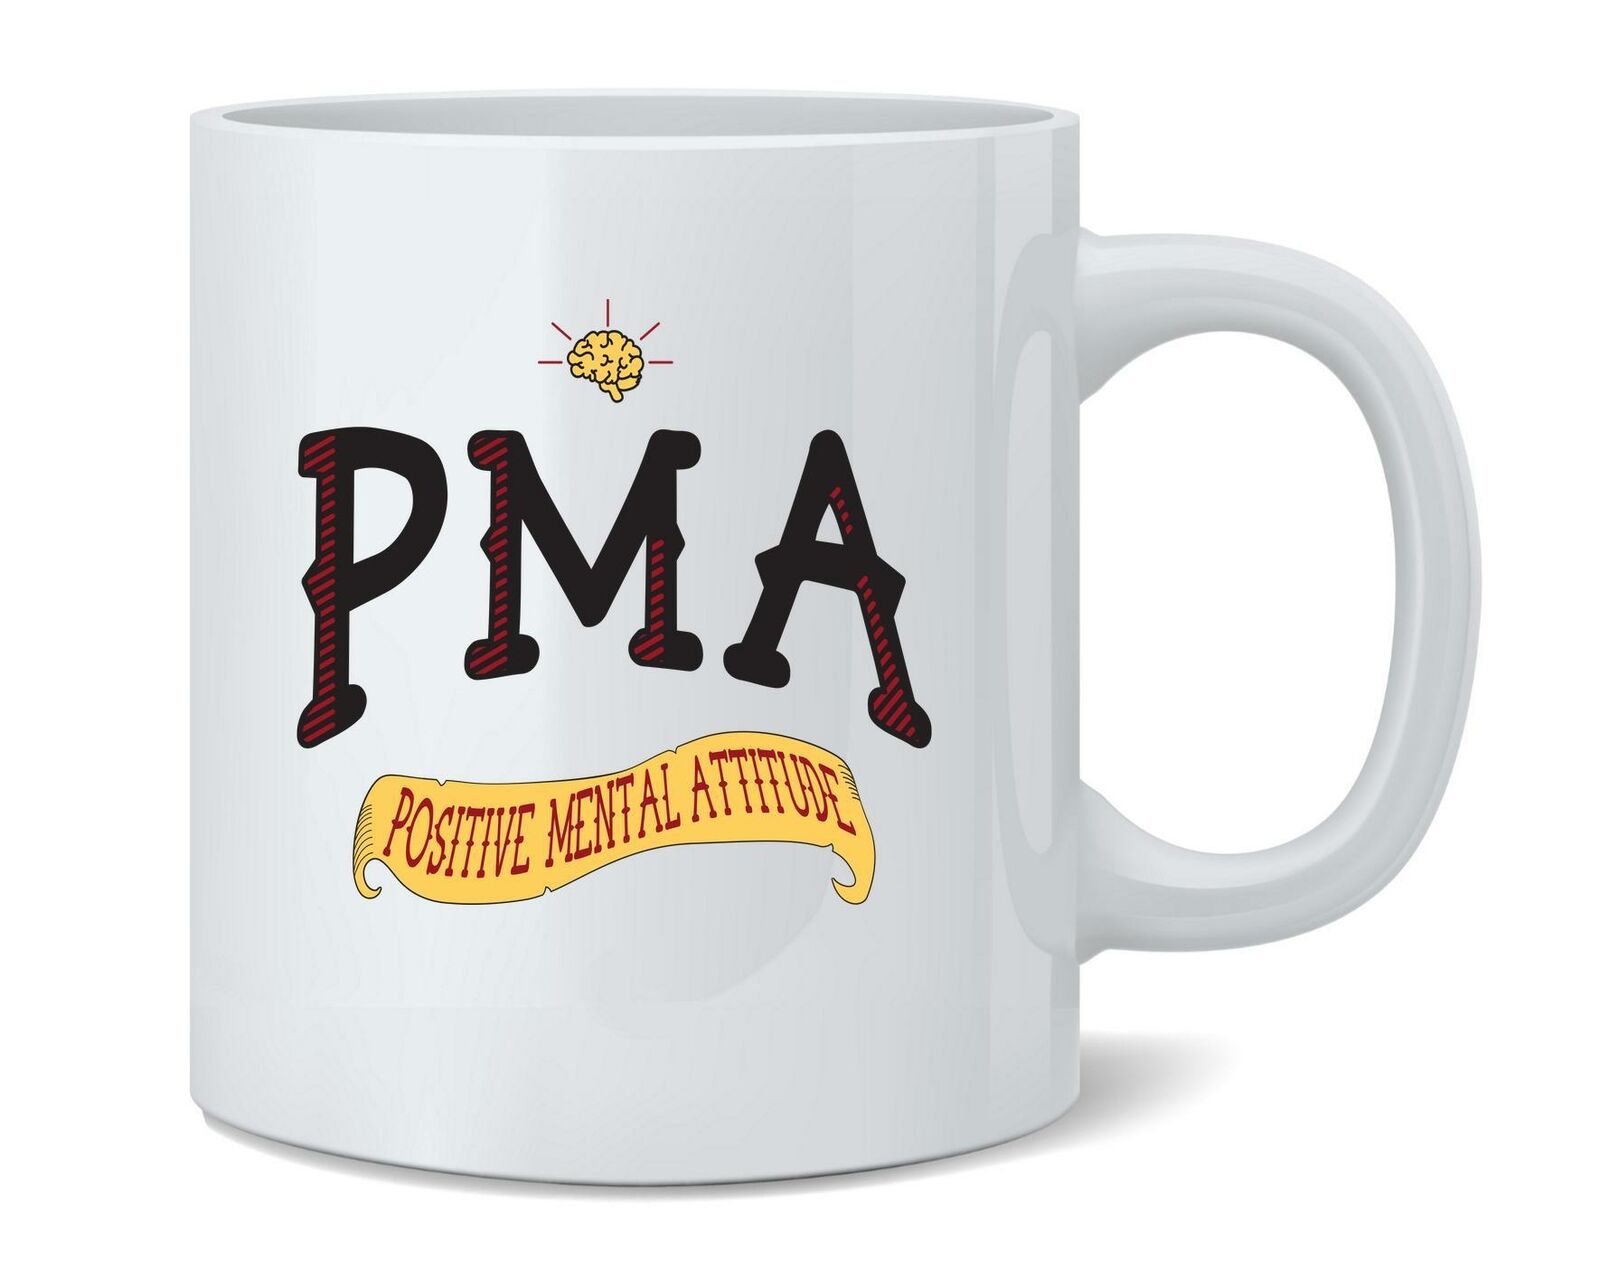 PMA Positive Mental Attitude Ceramic Coffee Mug Tea Cup Fun Novelty Gift 12 oz